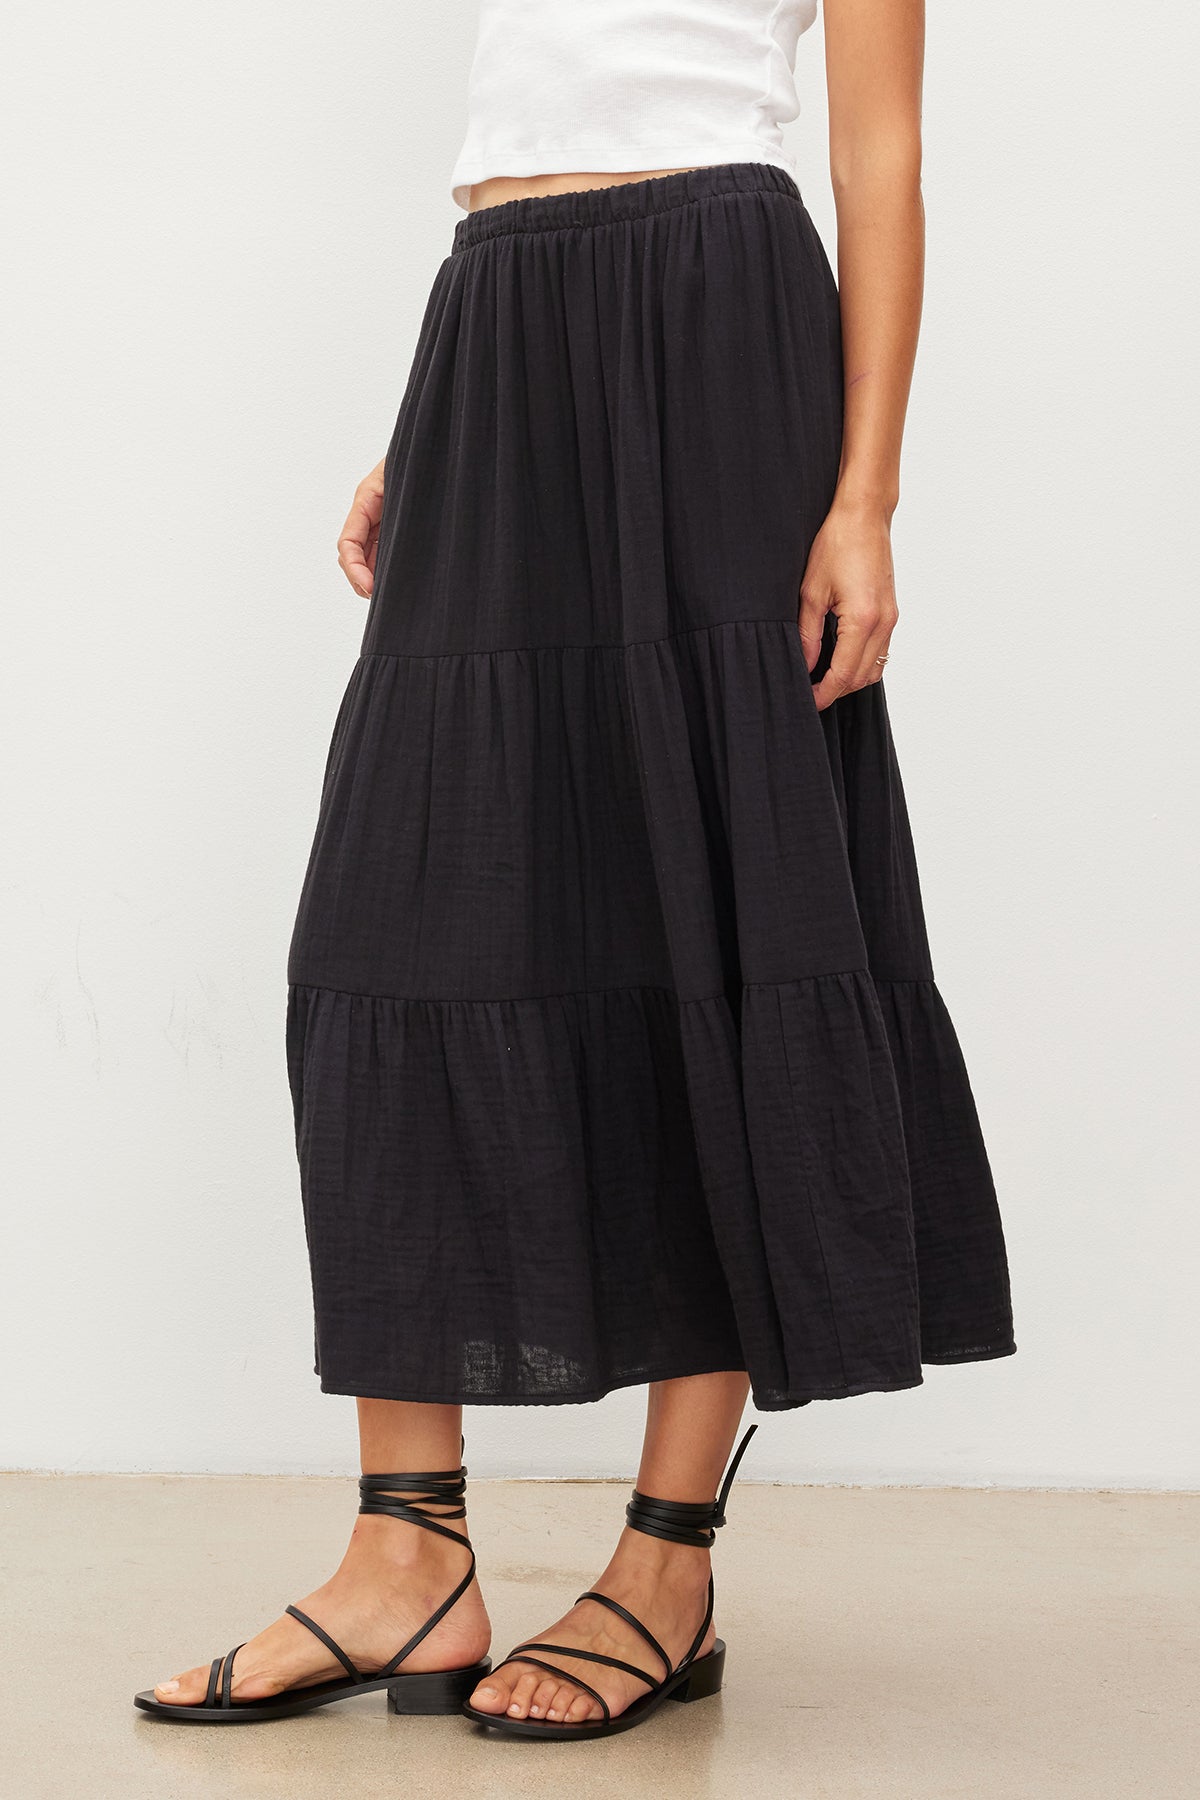 A woman wearing a black Velvet by Graham & Spencer Danielle Cotton Gauze Tiered Skirt with an elastic waist.-35955694043329